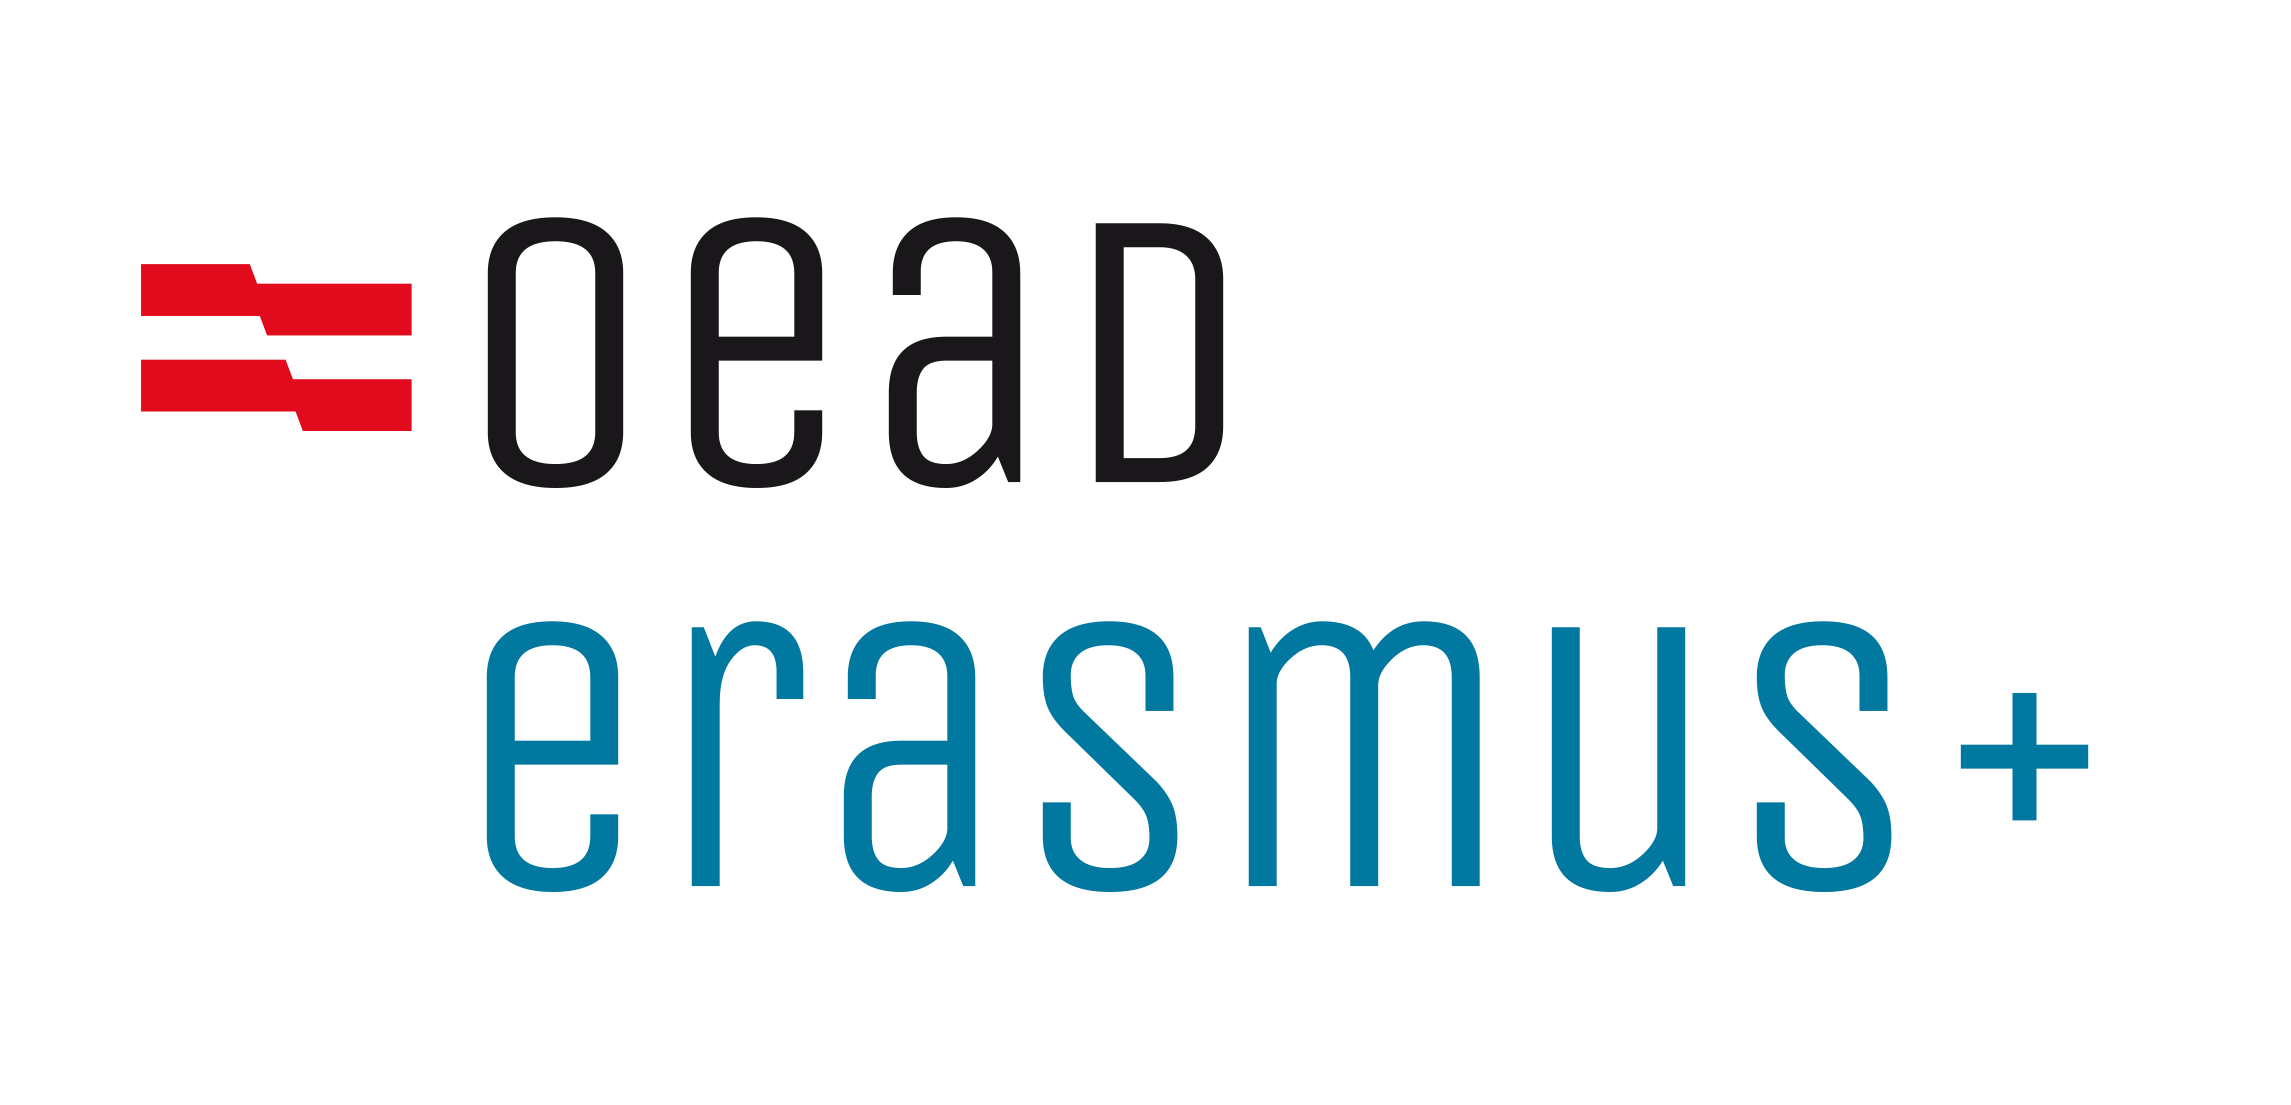 OEAD Erasmus+ - Logo